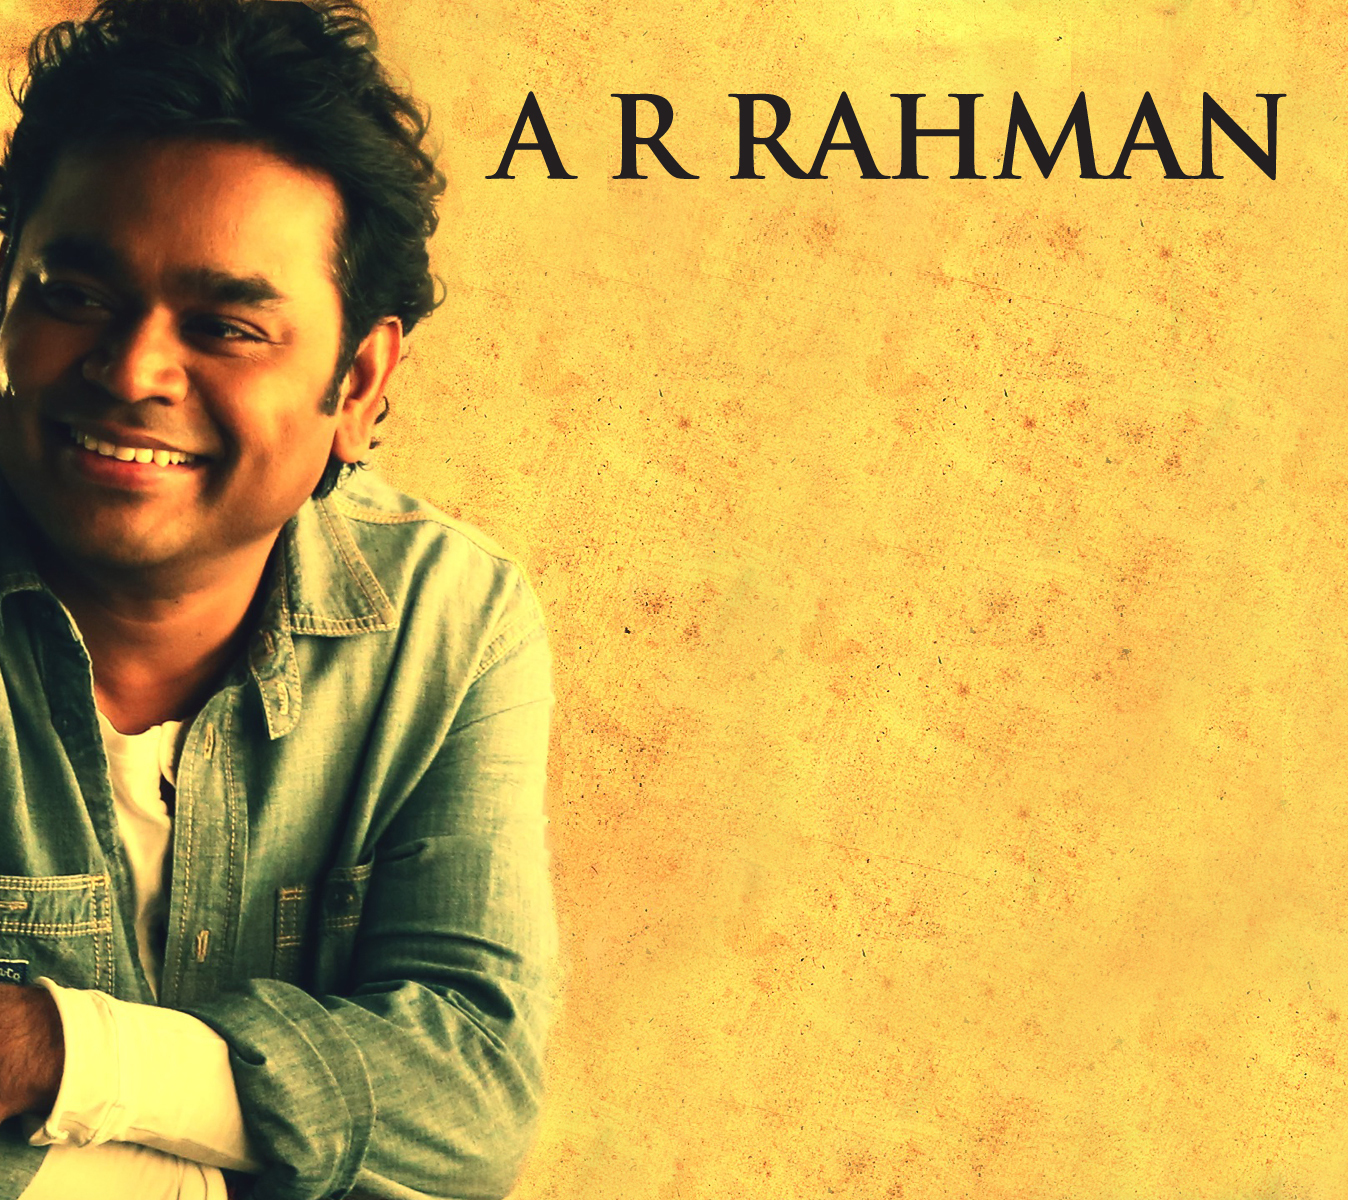 AR Rahman Songs & Lyrics: AR Rahman Twitter Background Picture